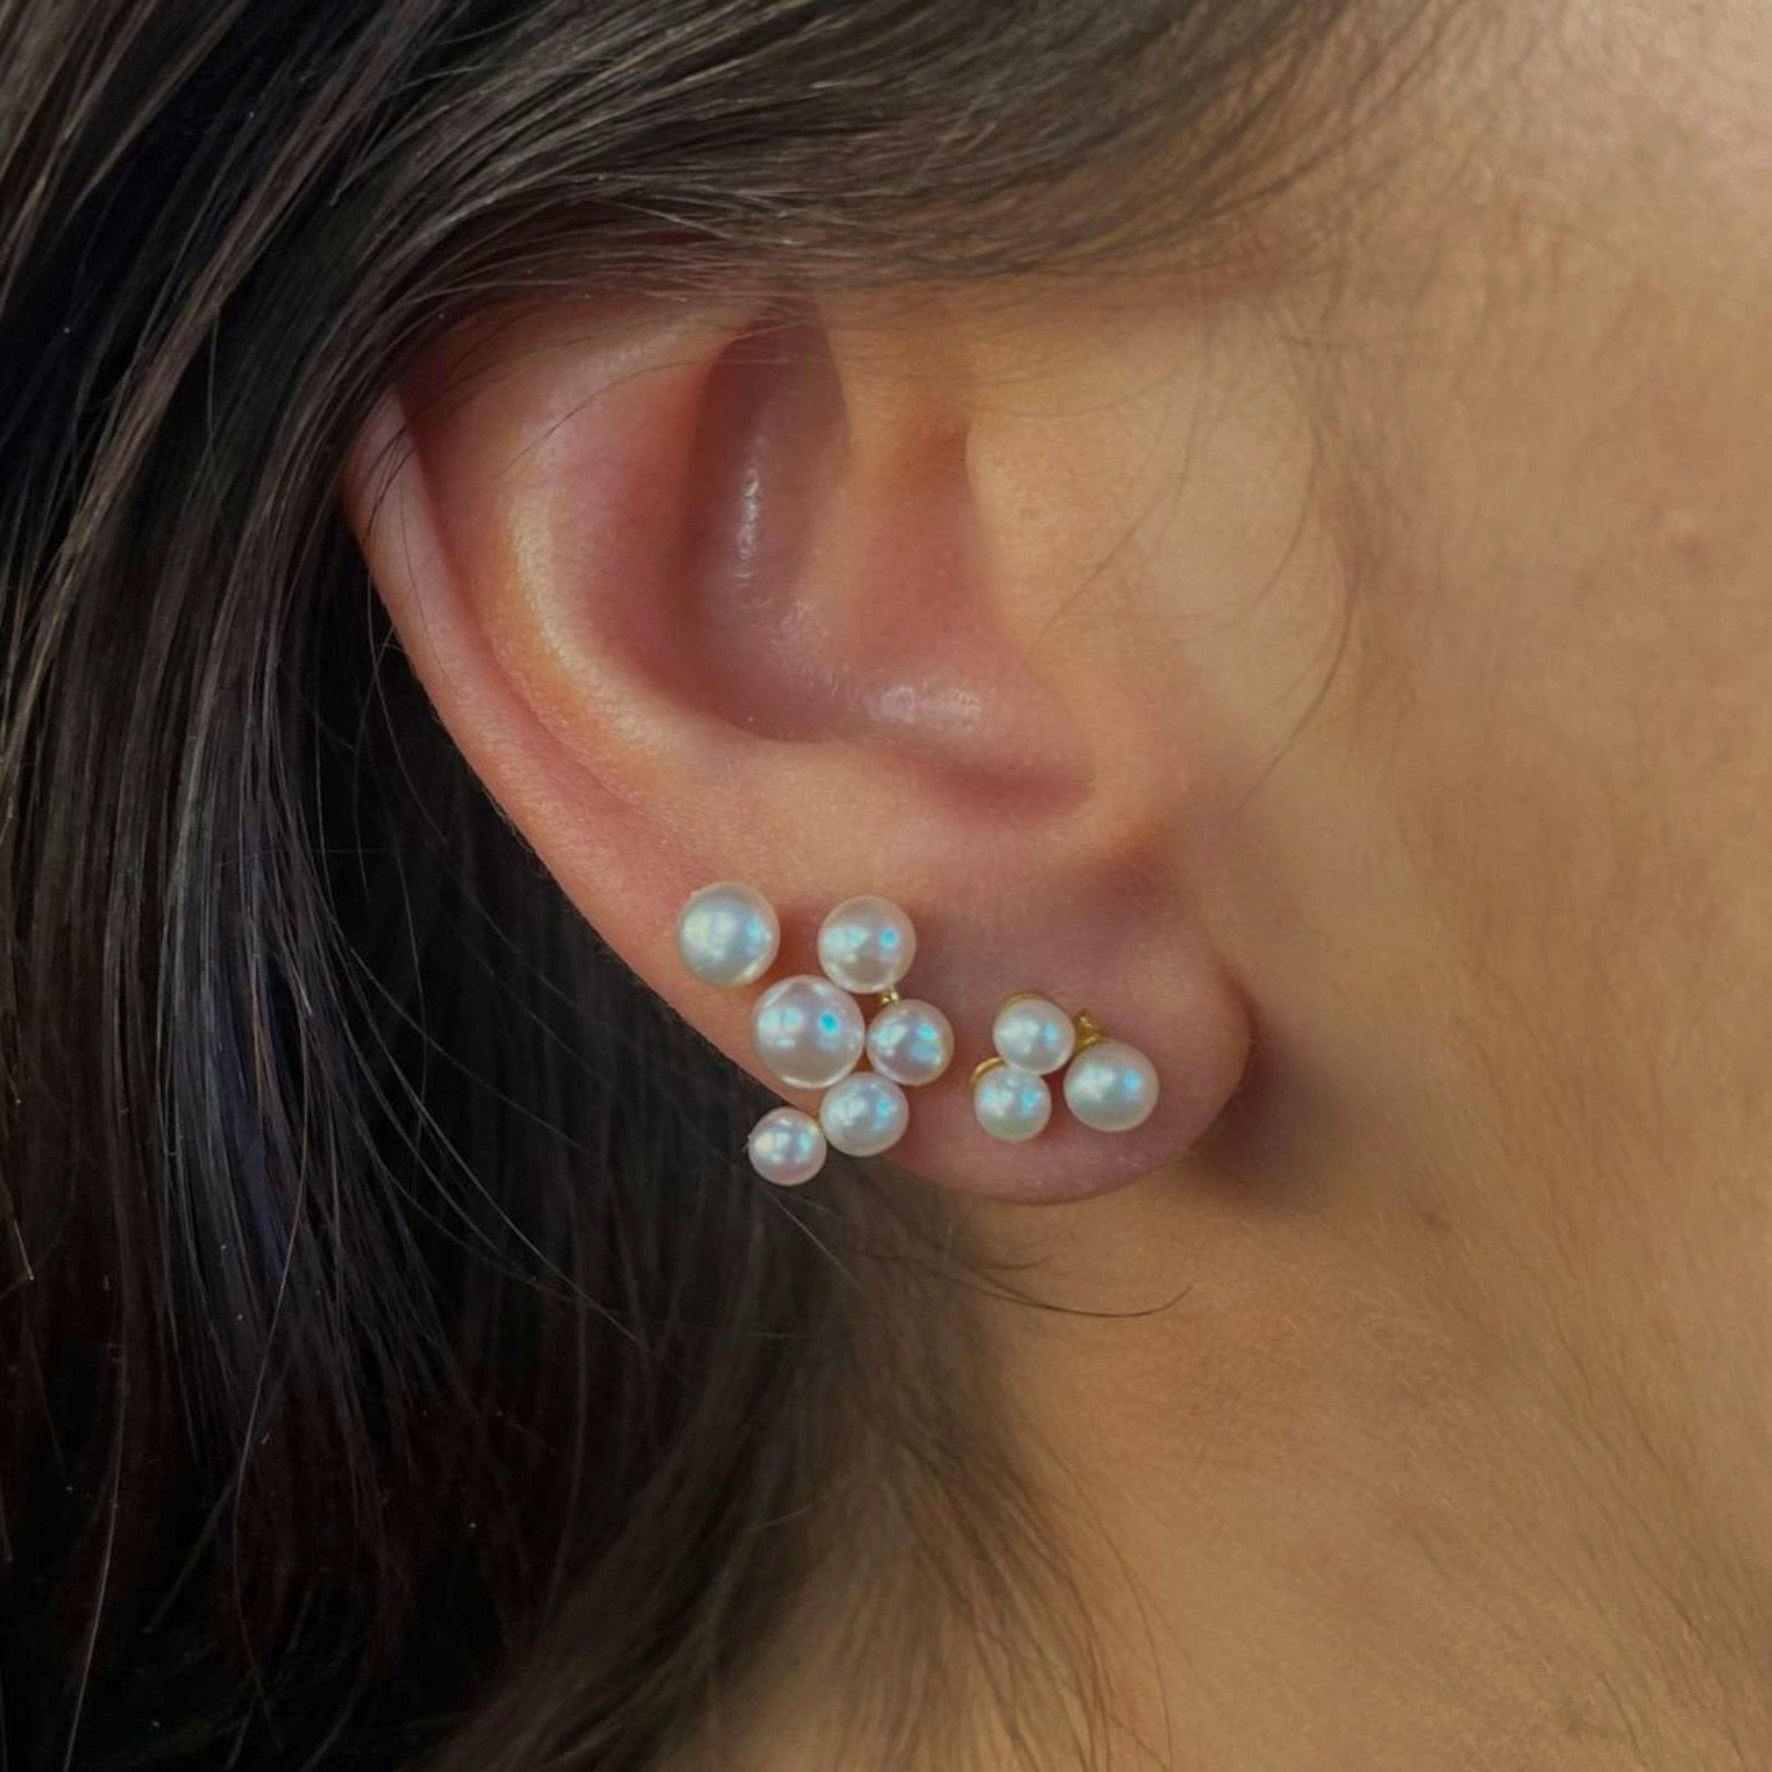 Bloom Berries Earring från STINE A Jewelry i Silver Sterling 925